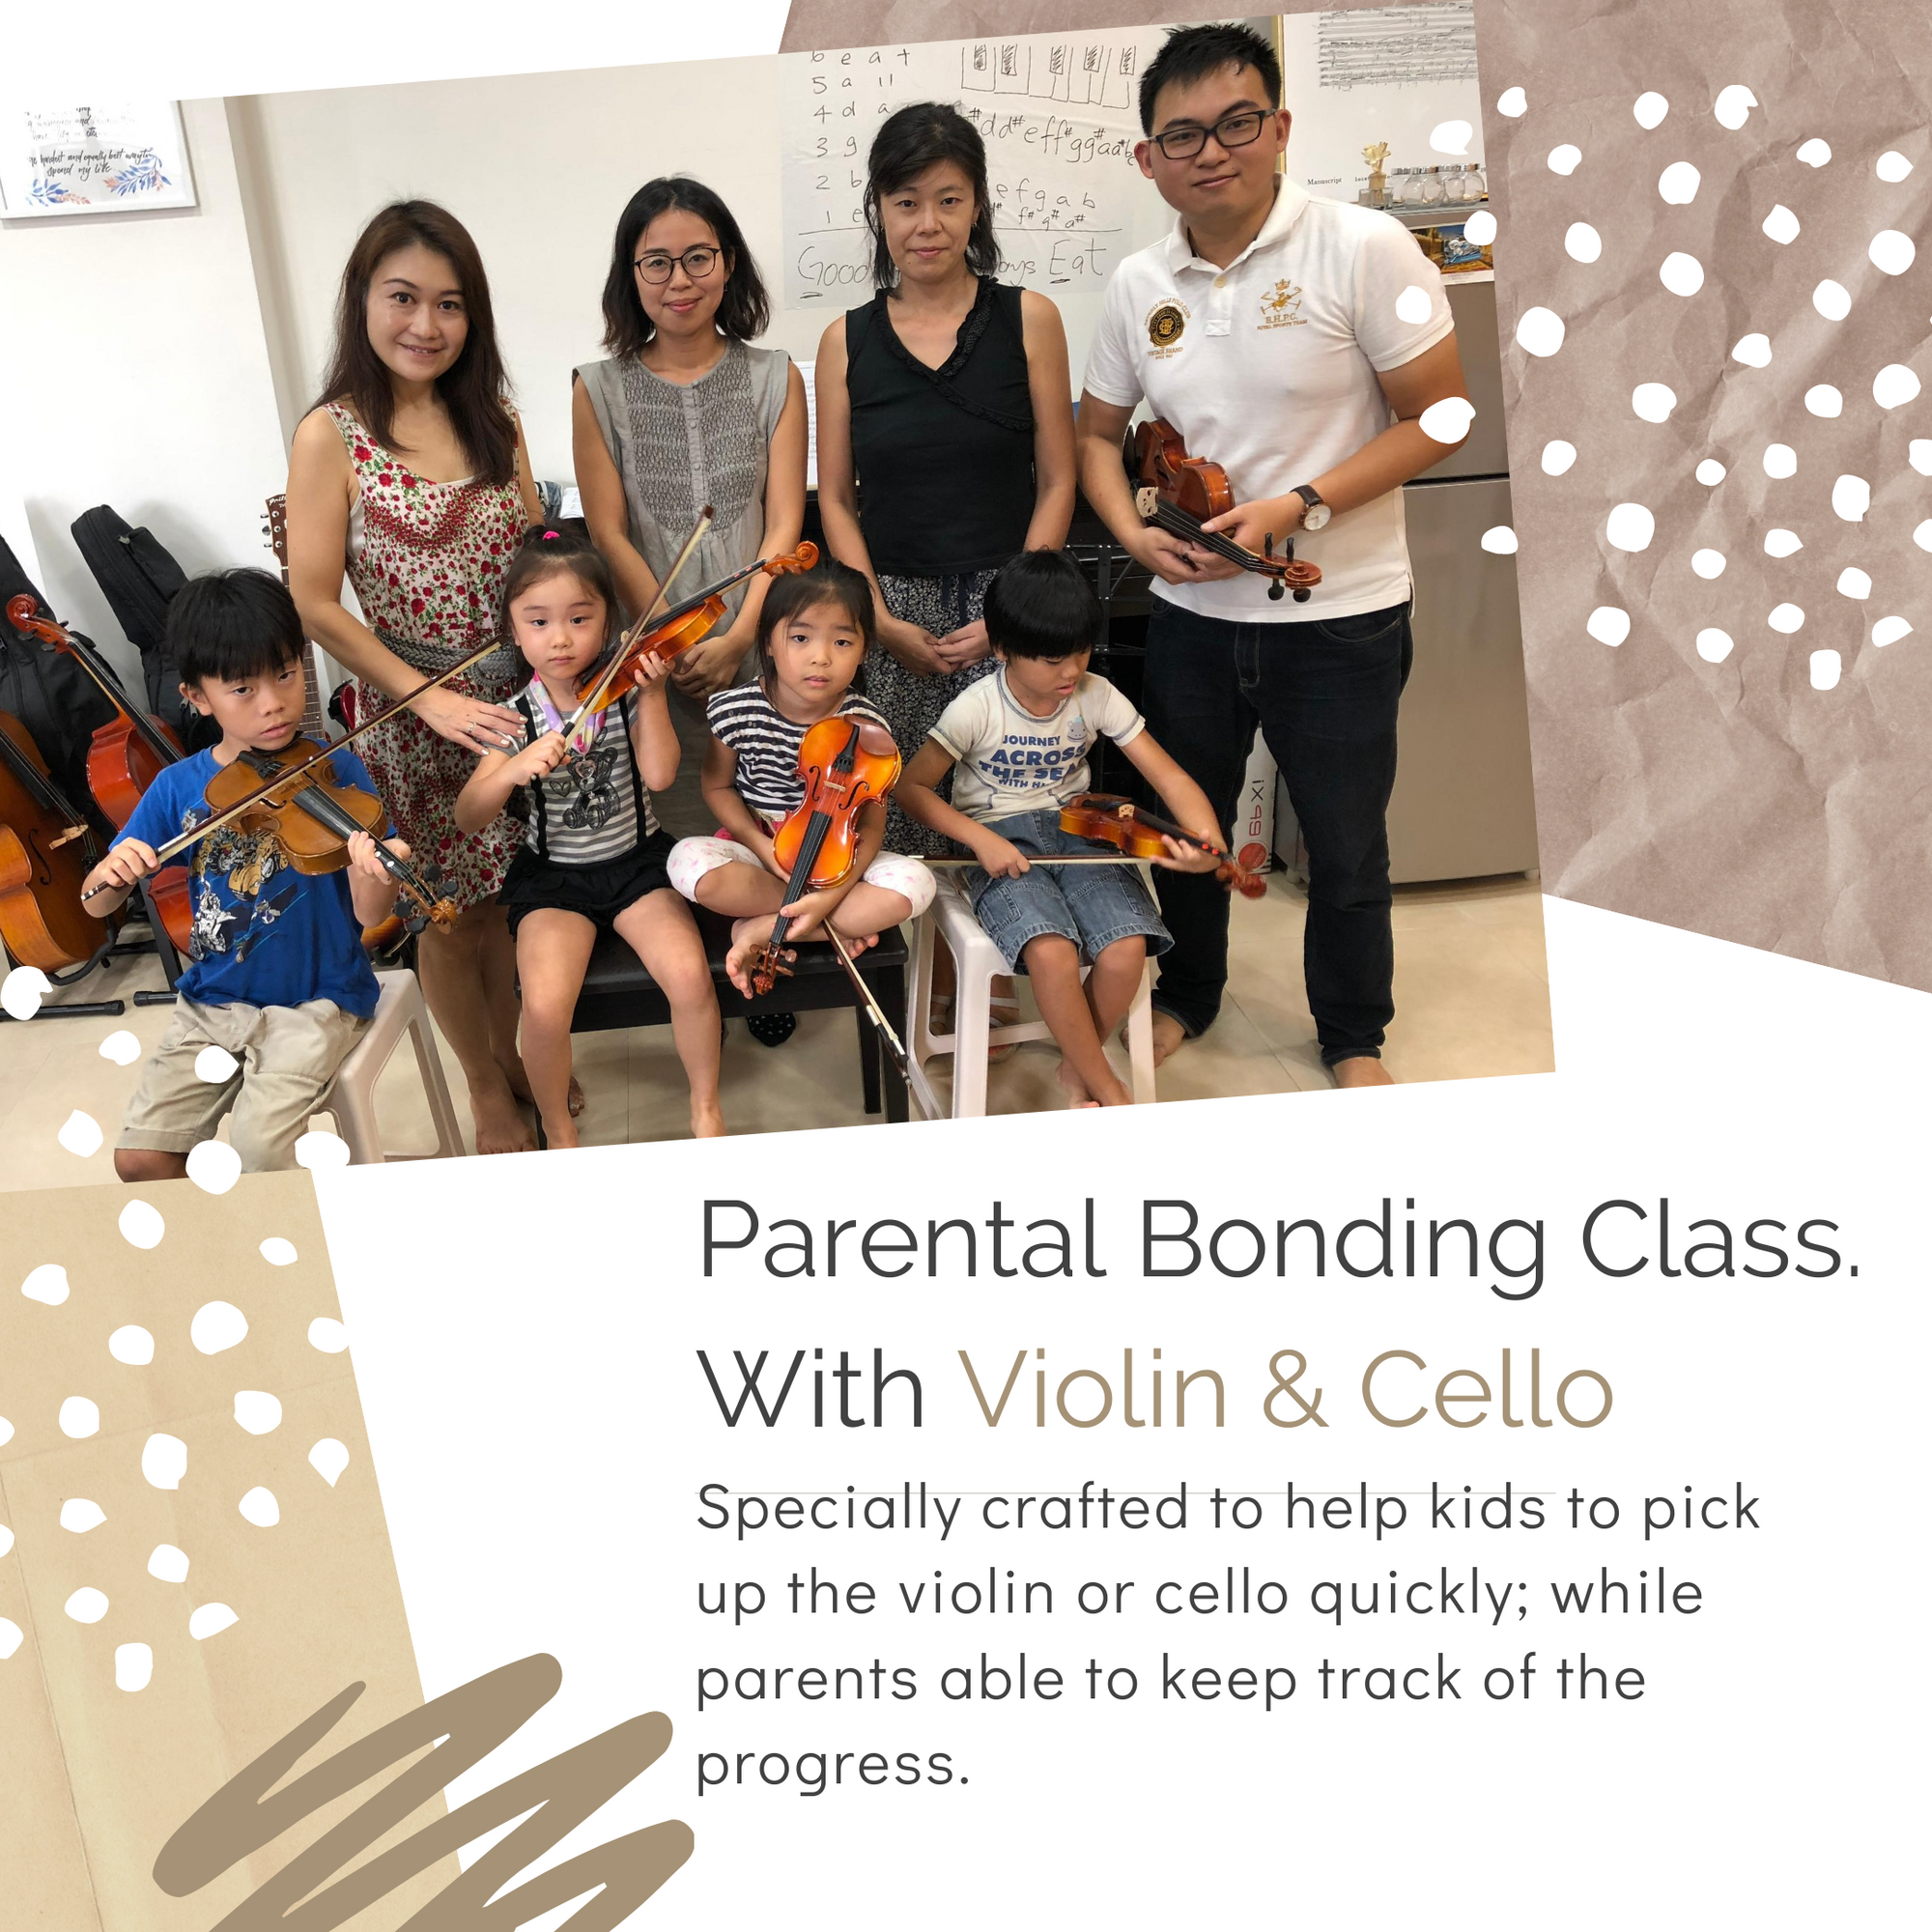 Parental-Kids Bonding with Violin & Cello Class (includes FREE Cello/Violin rental !)